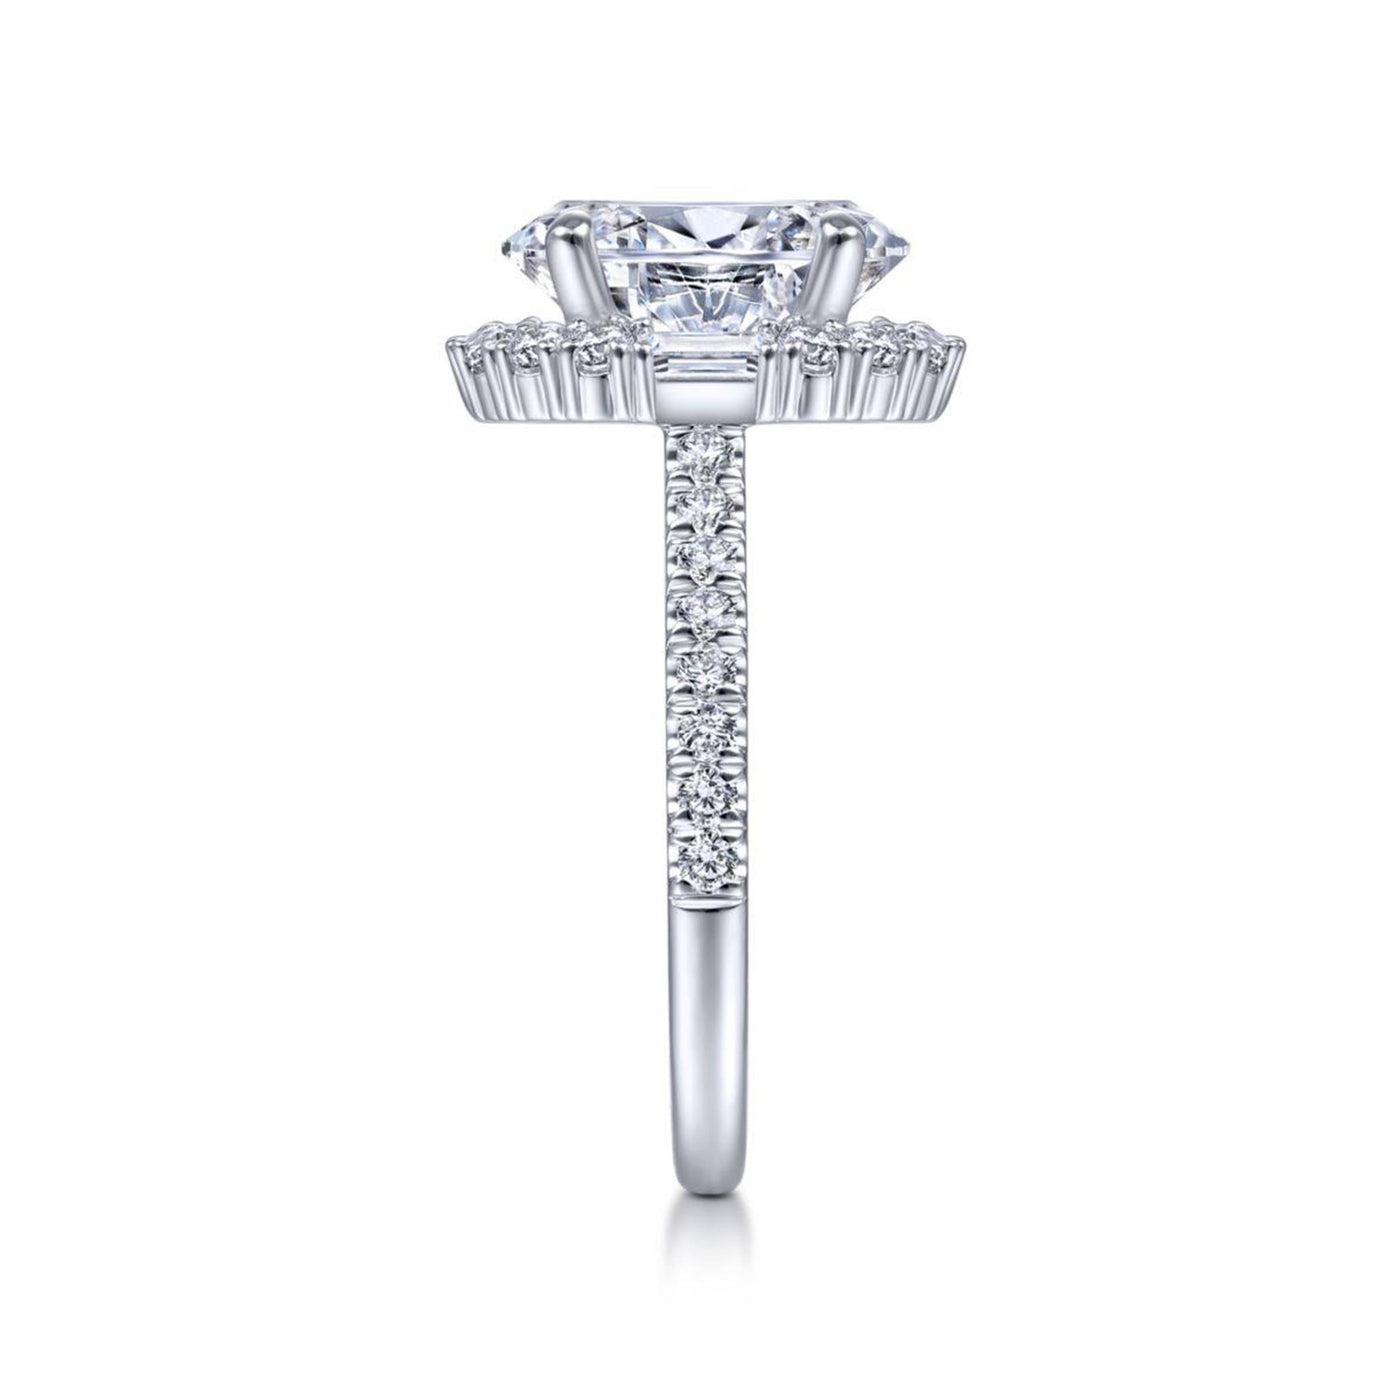 Gabriel 14K White Gold .83ctw Oval Halo Style Diamond Semi-Mount Engagement Ring